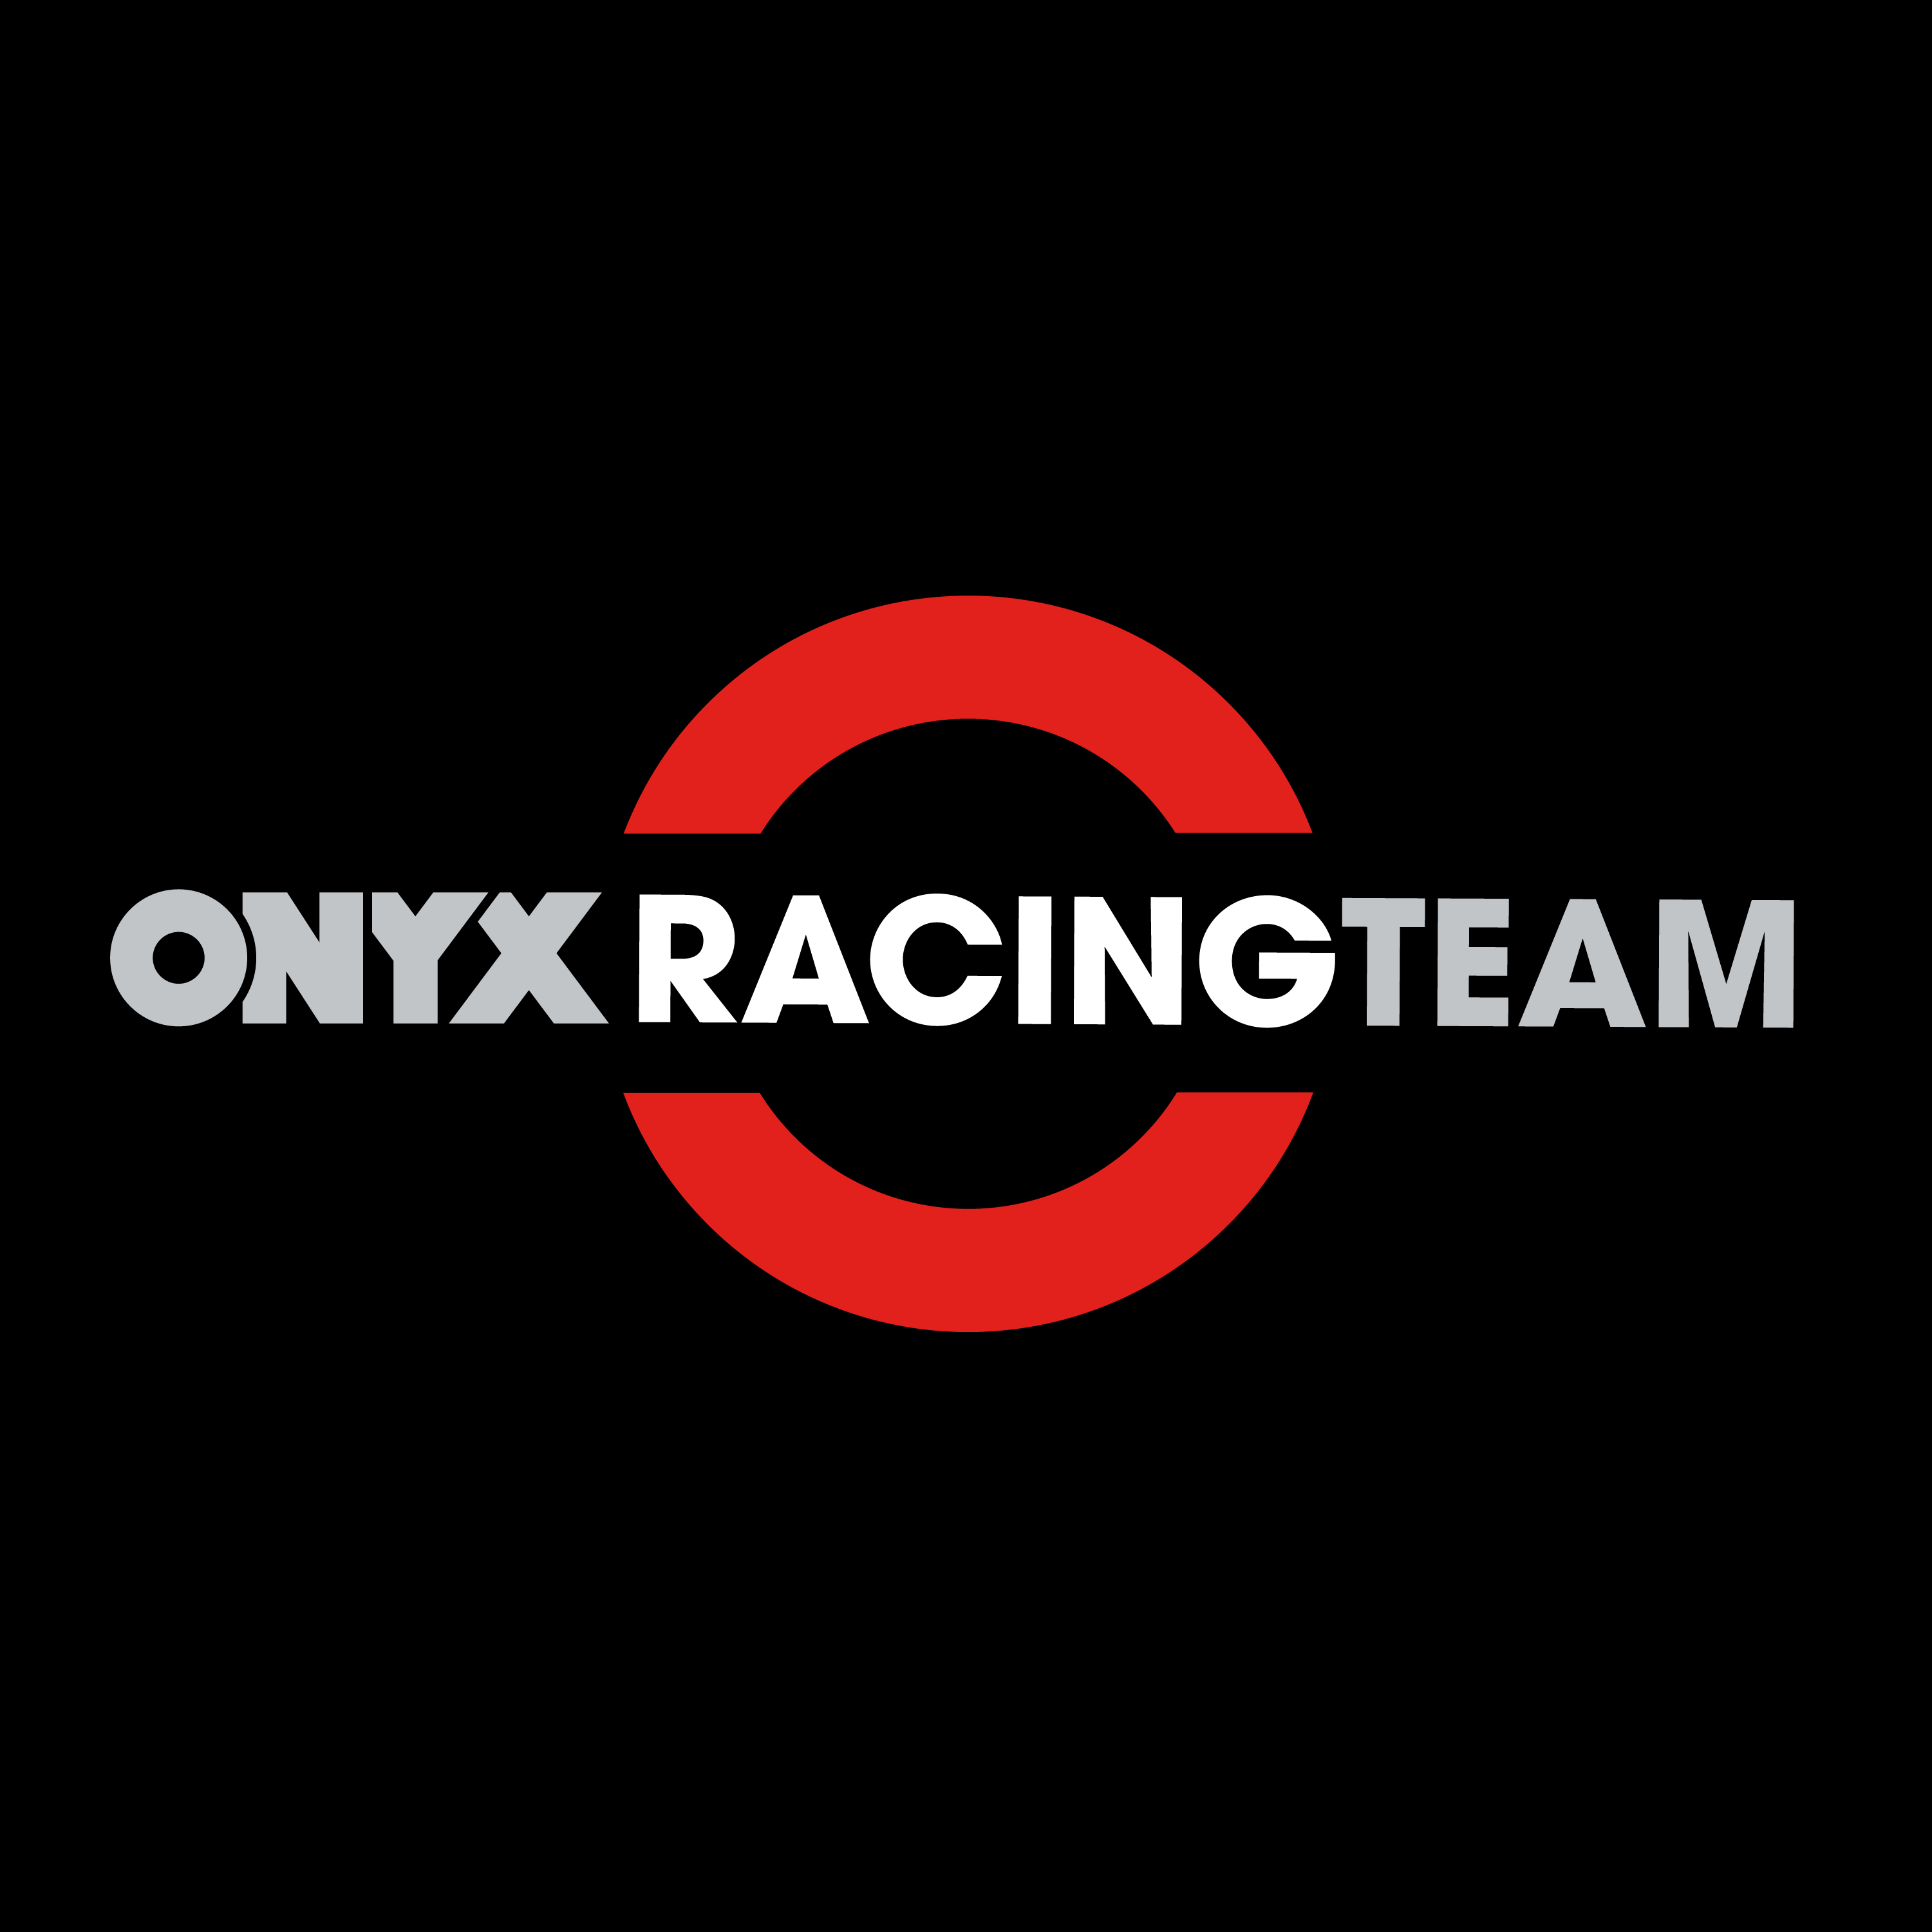 Club Image for ONYX RACING TEAM